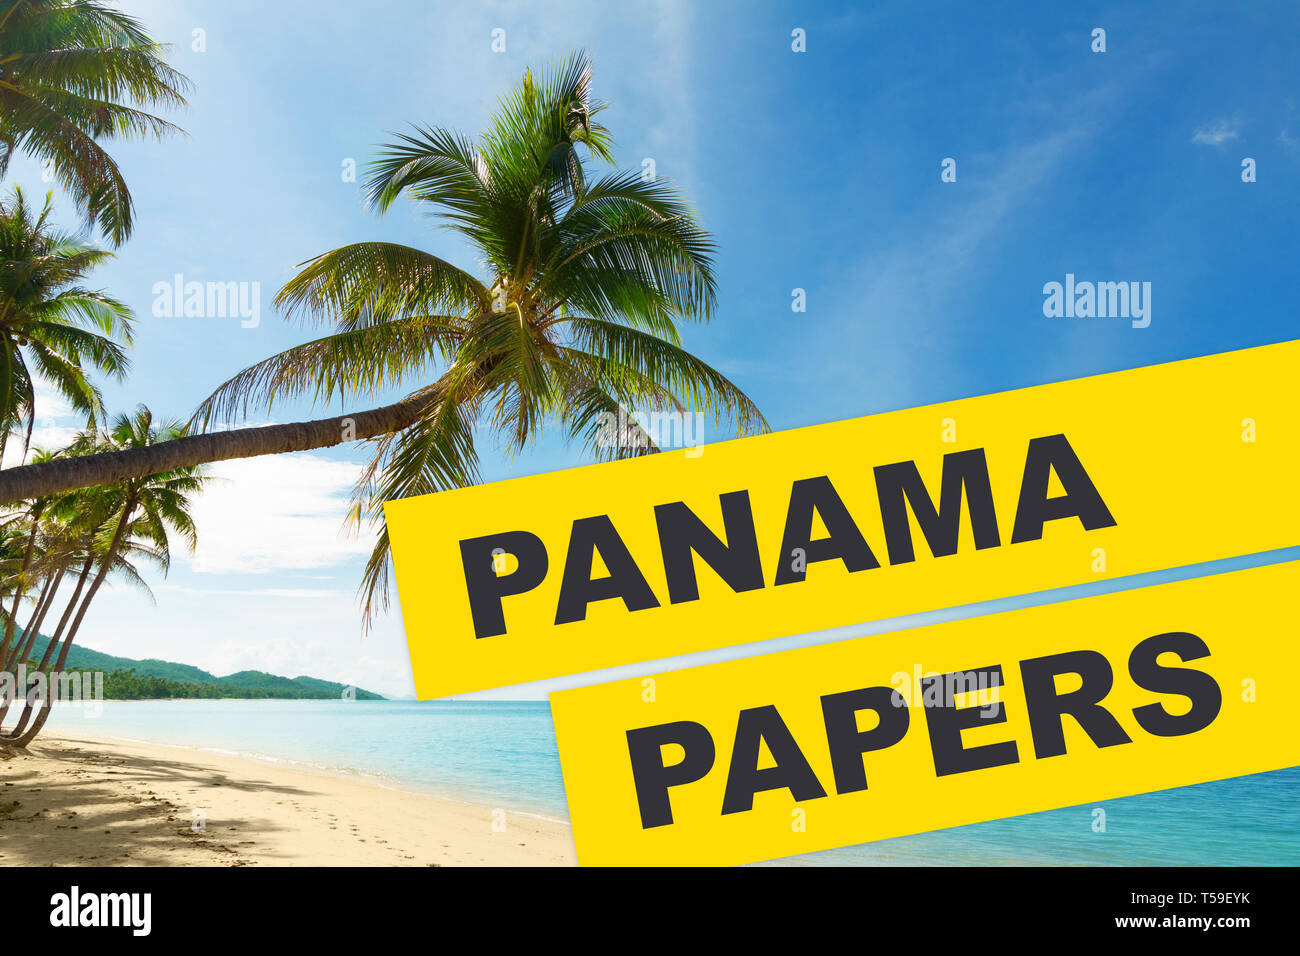 Panama Papiere 2016 Dokumente leck Konzept Collage mit tropischen Strand und Panama Papiere Text. Stockfoto